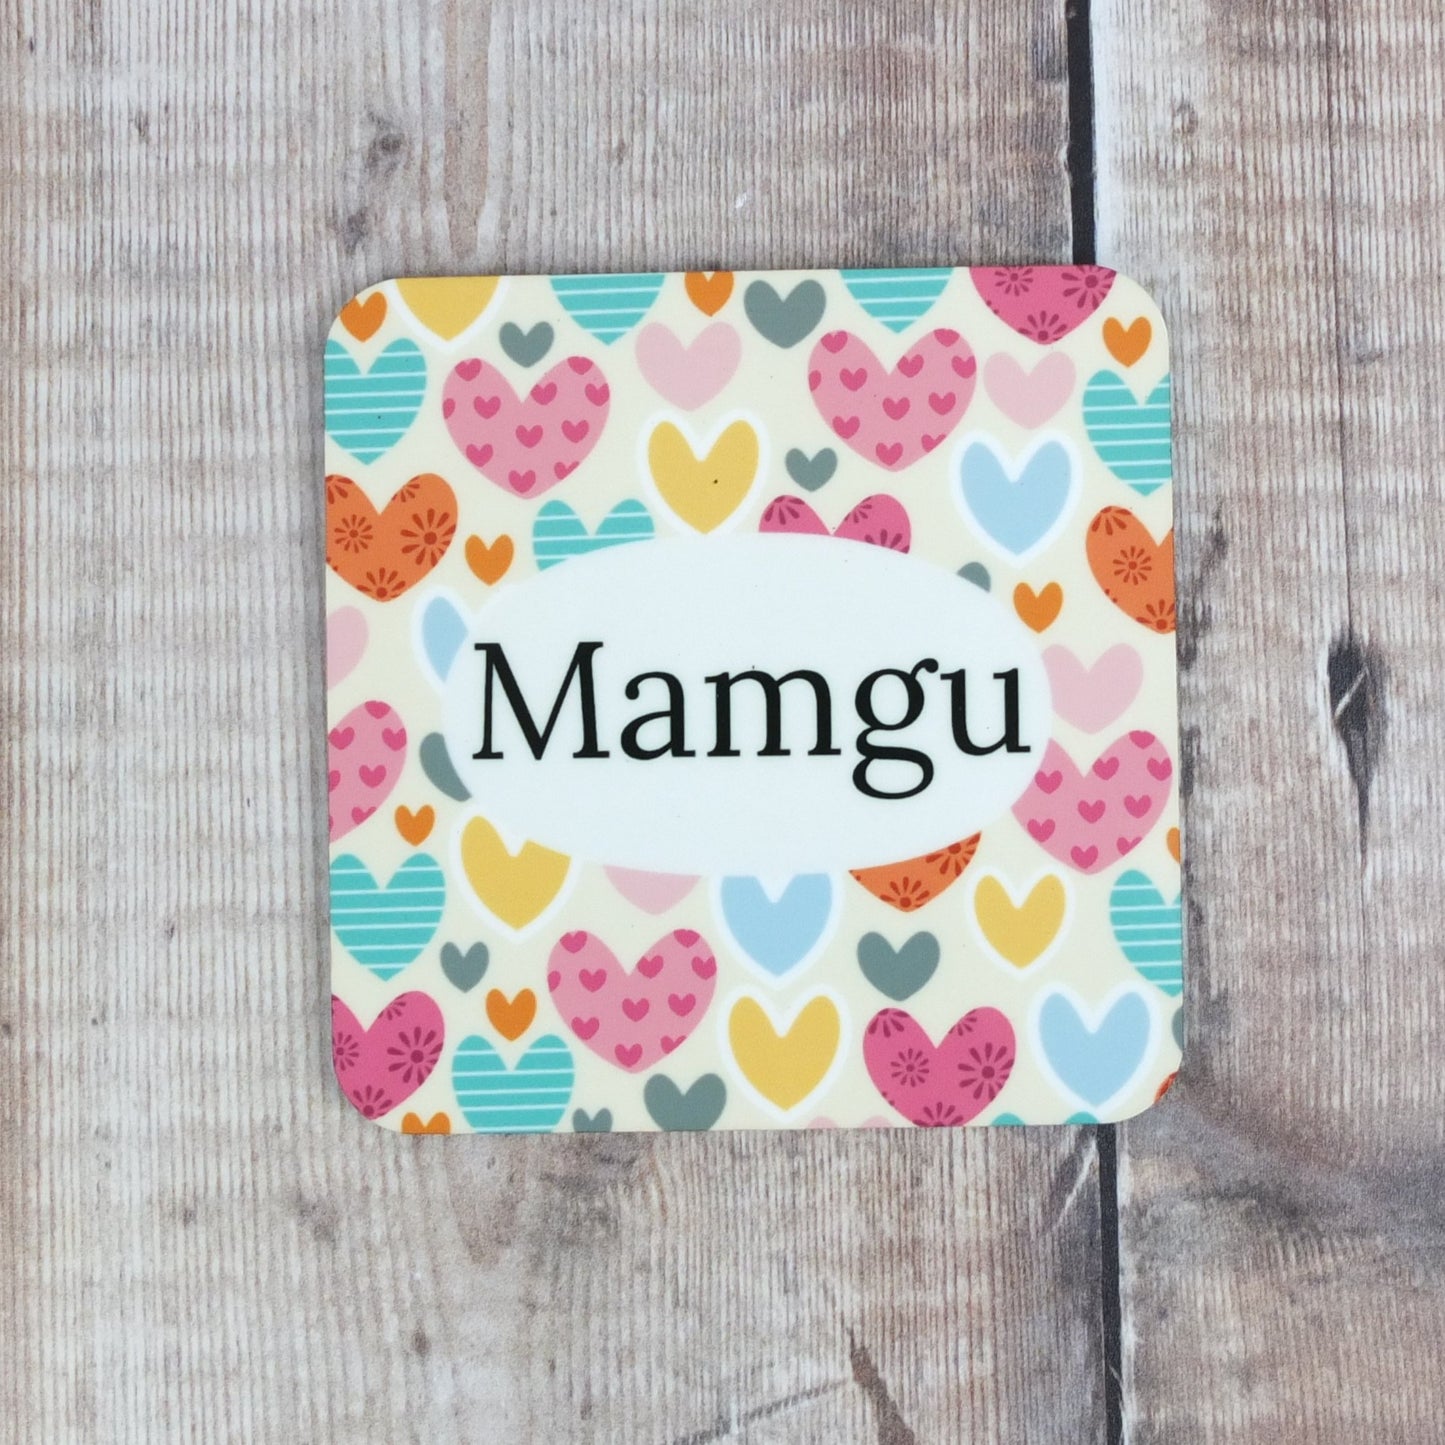 Mamgu Hearts Coaster